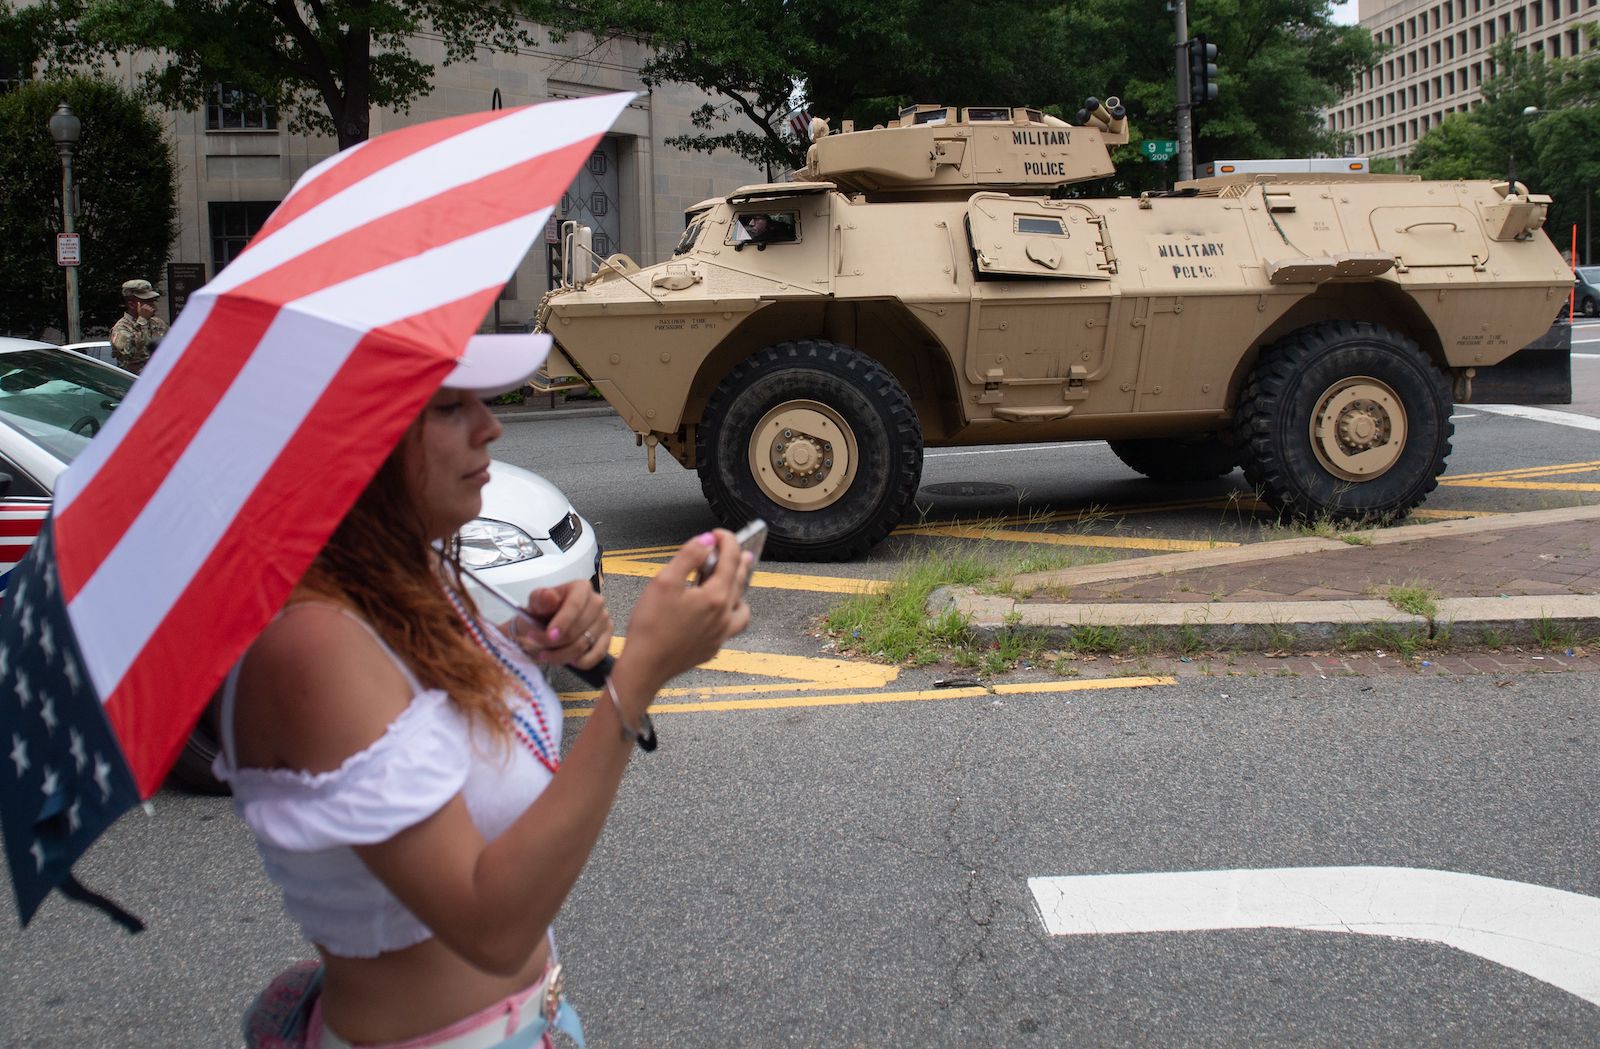 1033 program: A woman takes a photo near an armored military vehicle in Washington, DC.